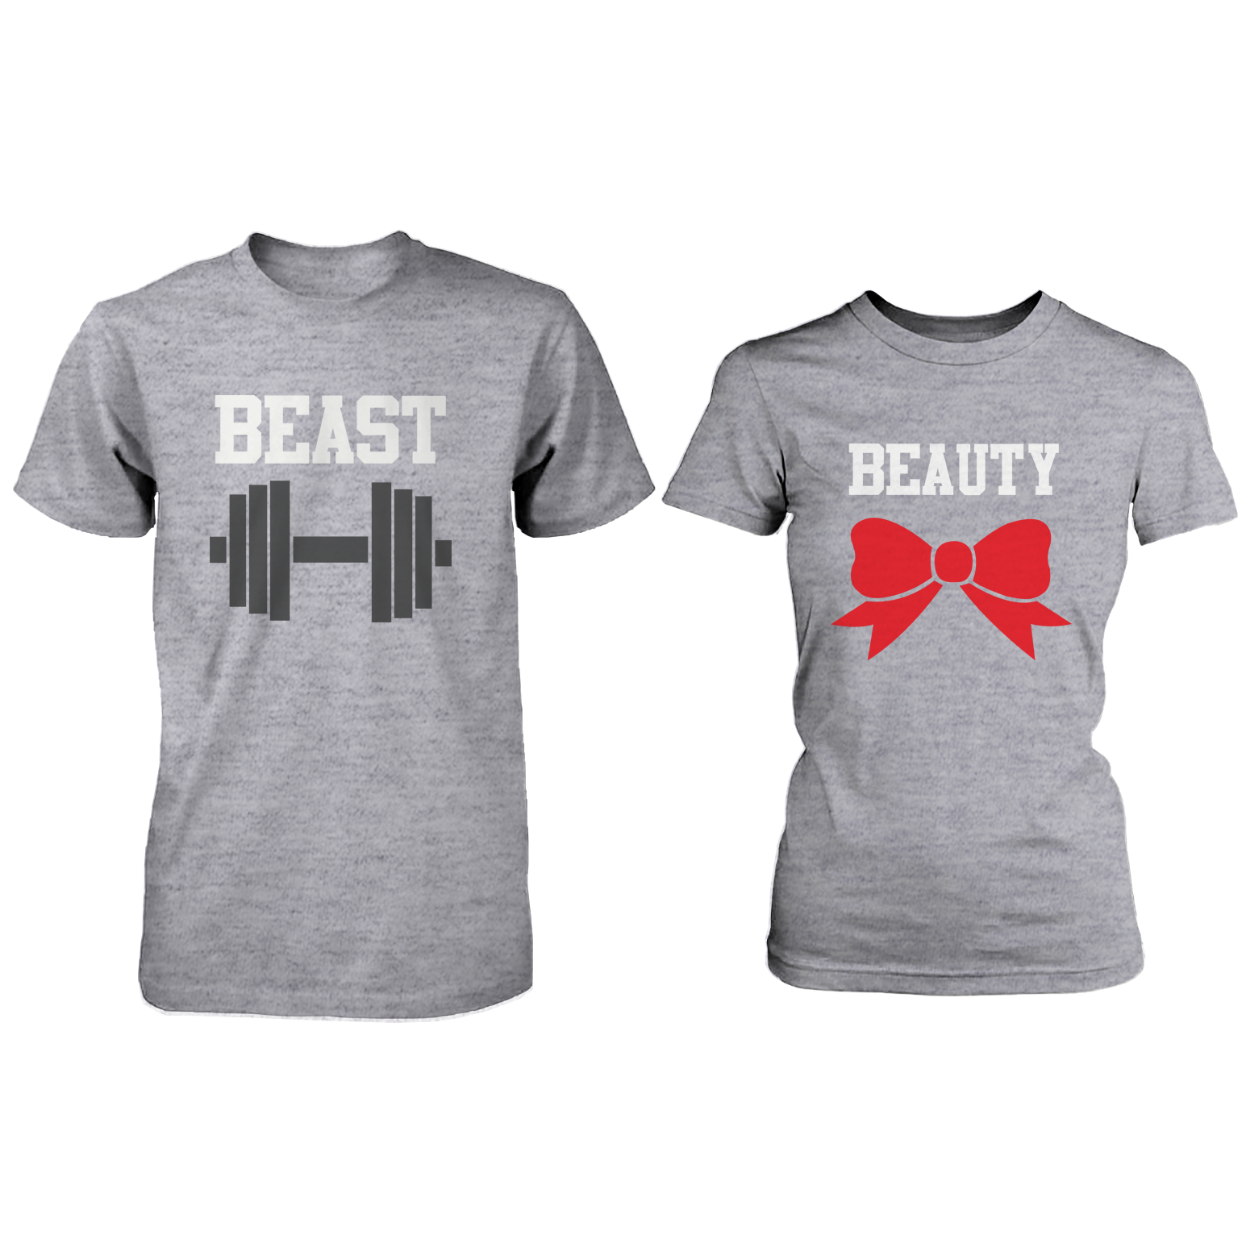 Beauty And Beast Couple'S Workout Shirts